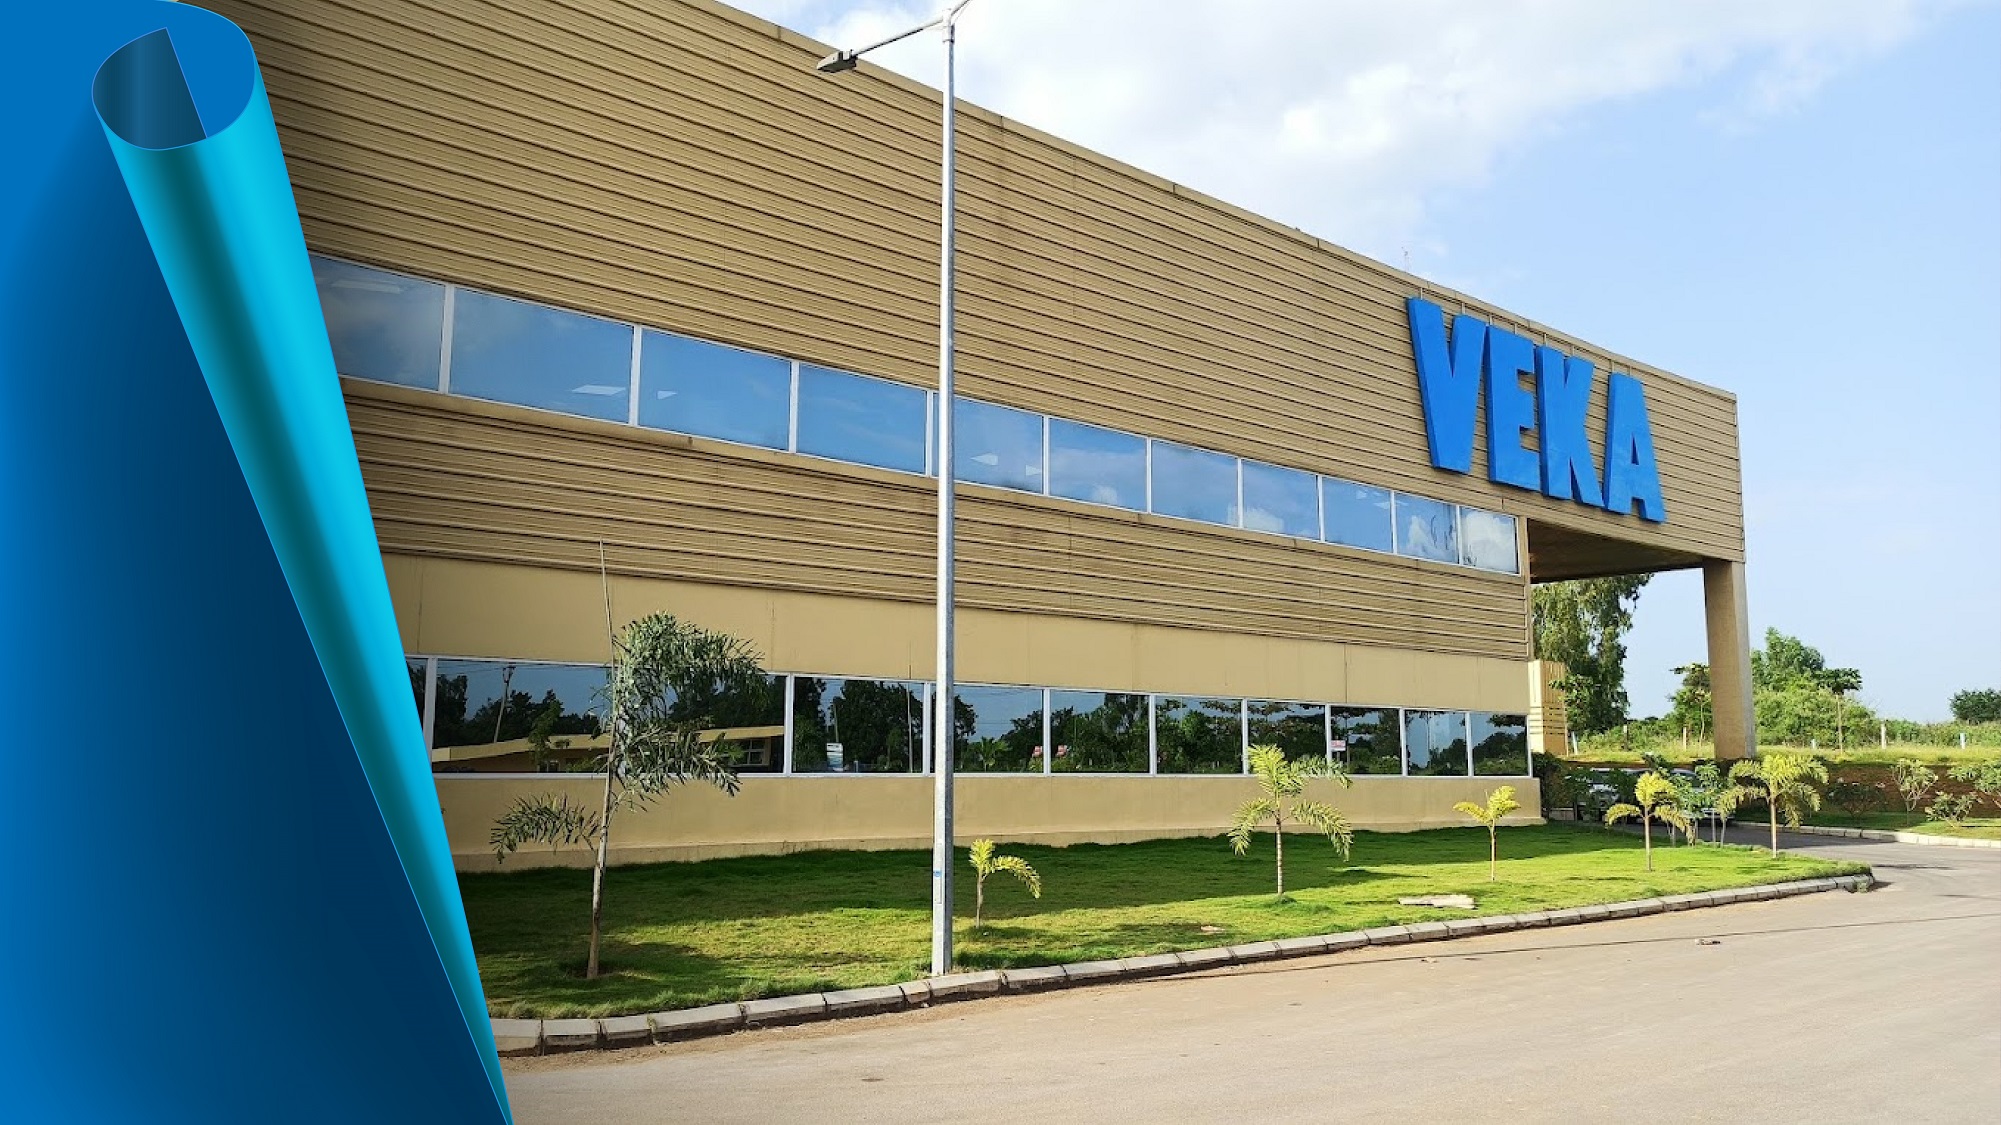 VEKA uPVC windows and doors